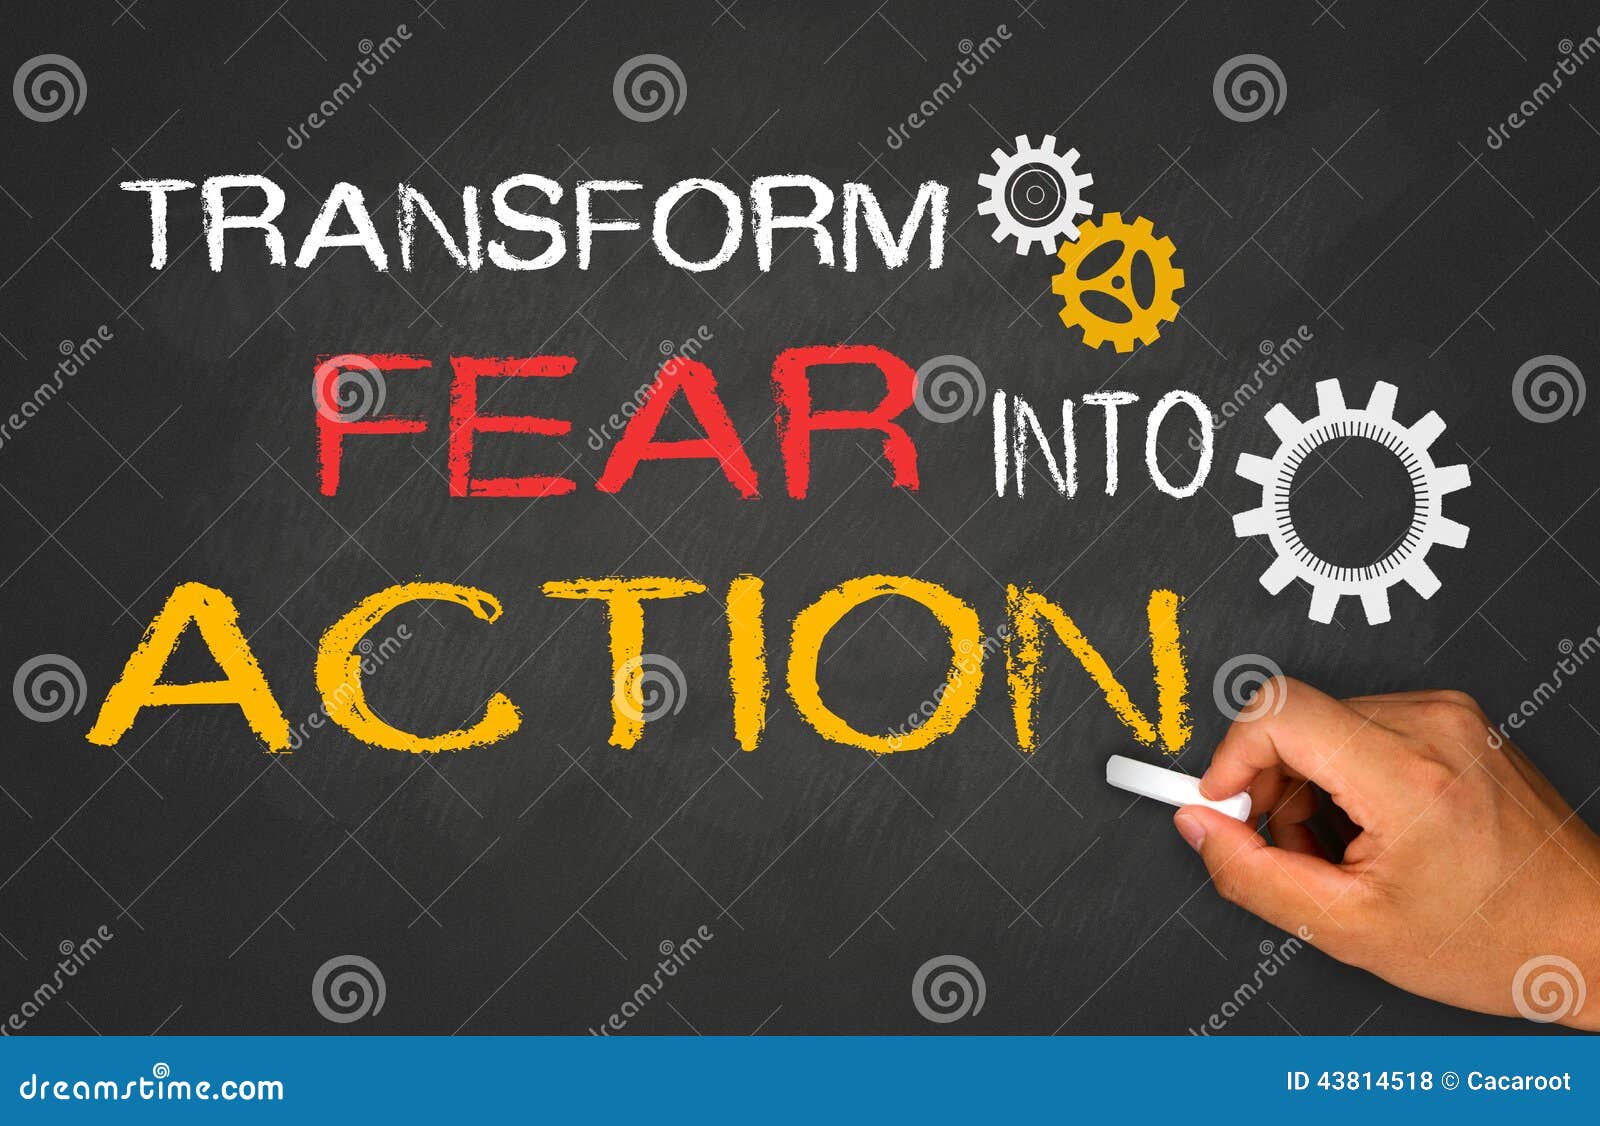 transform fear into action